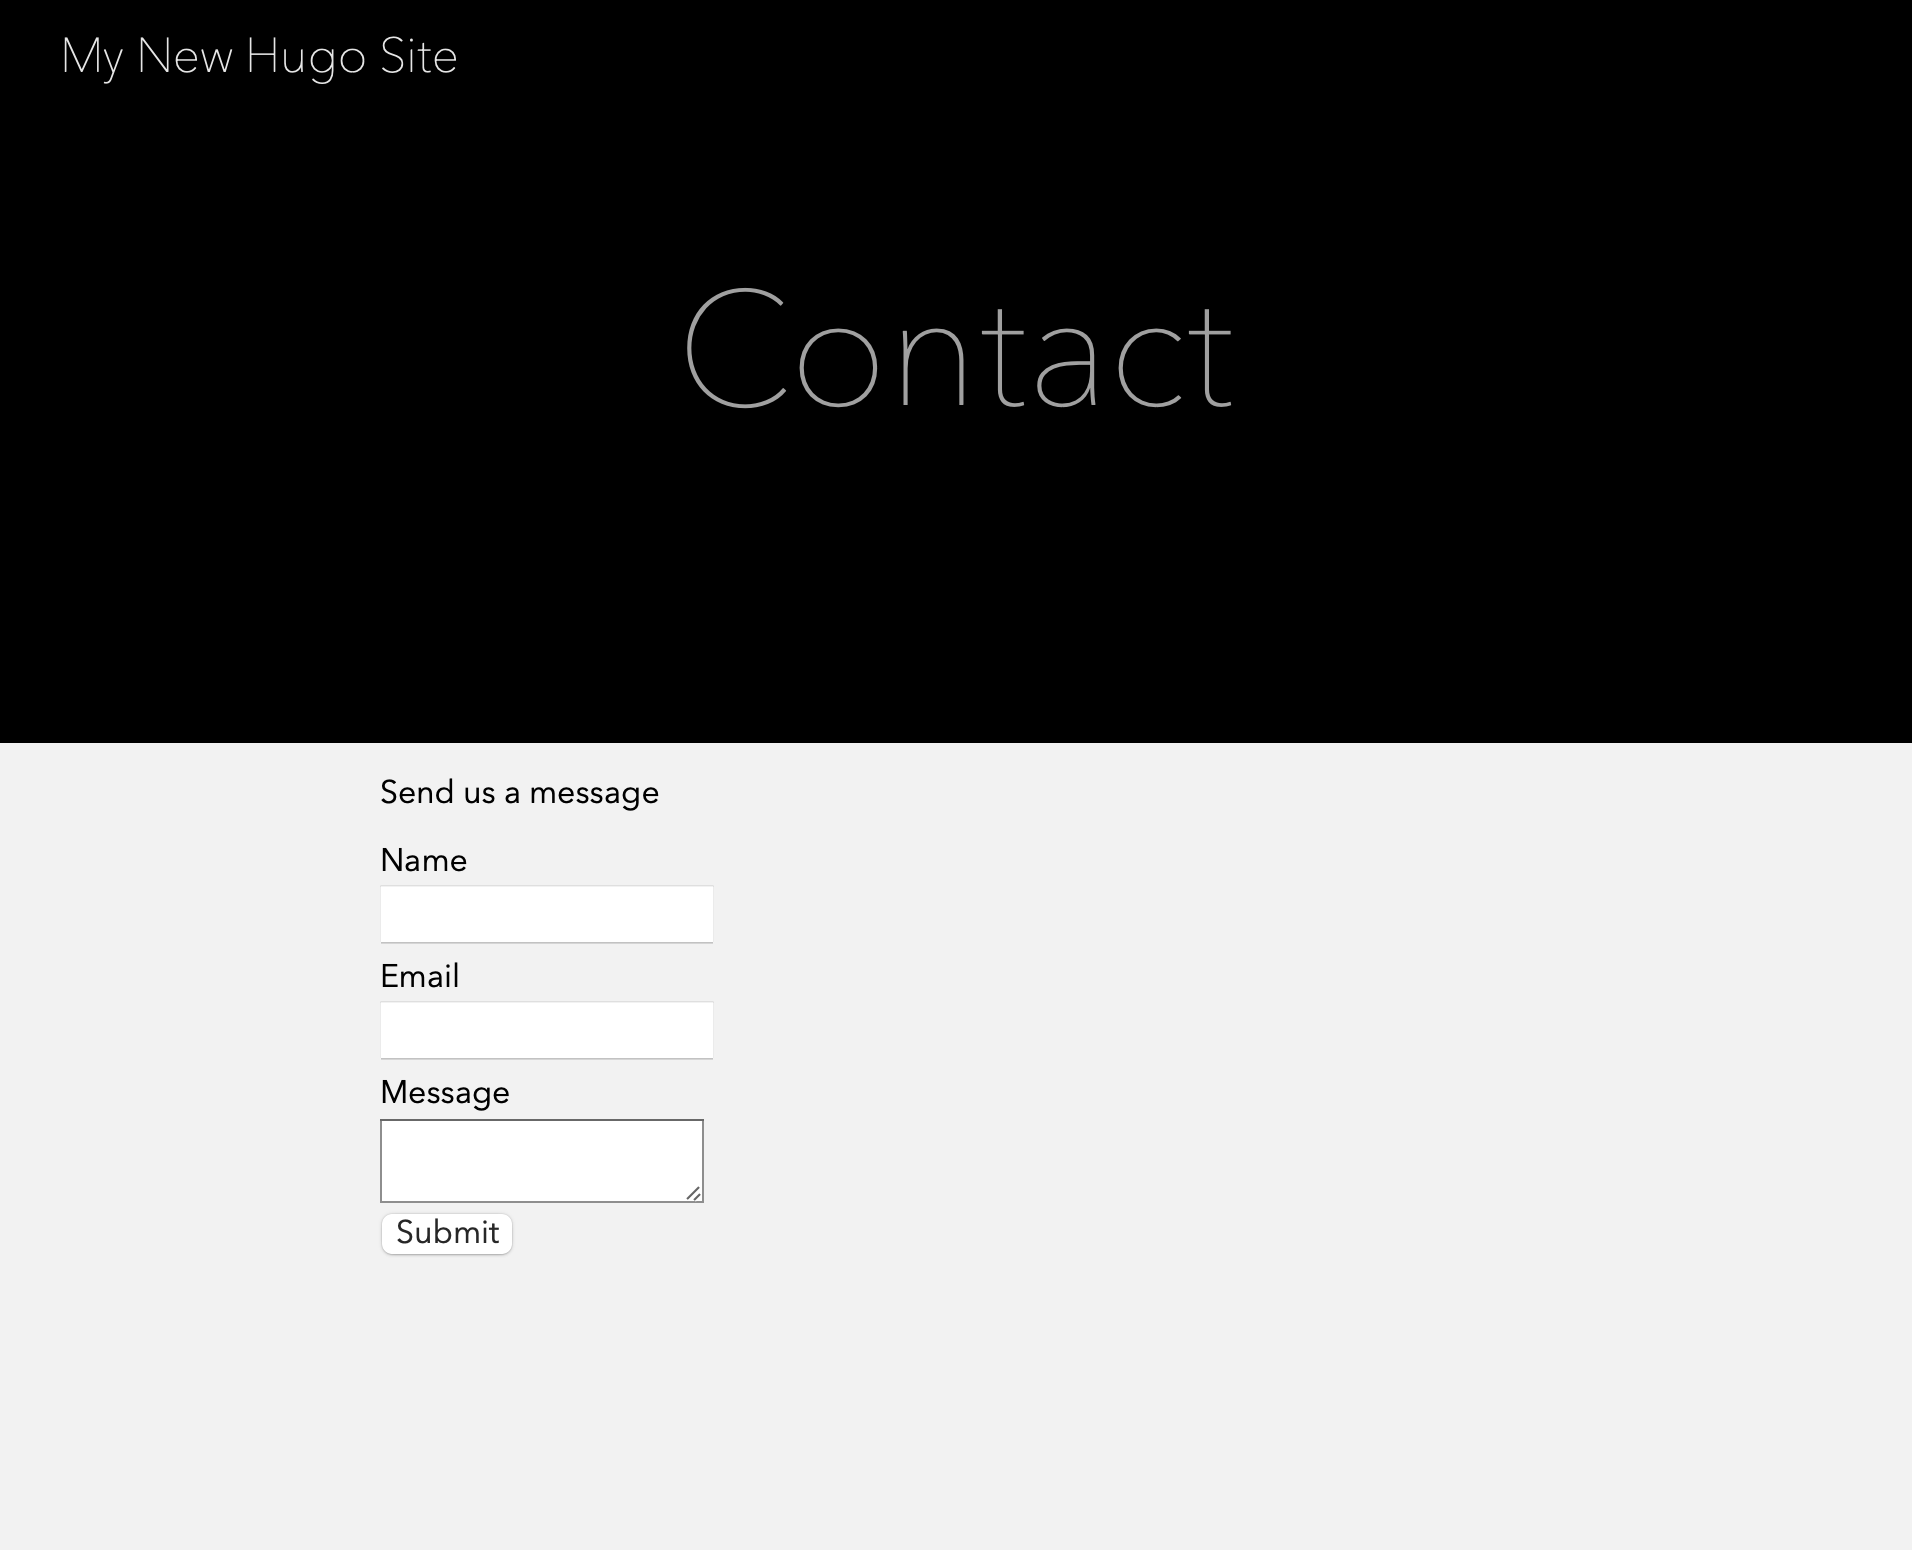 Our Hugo contact form